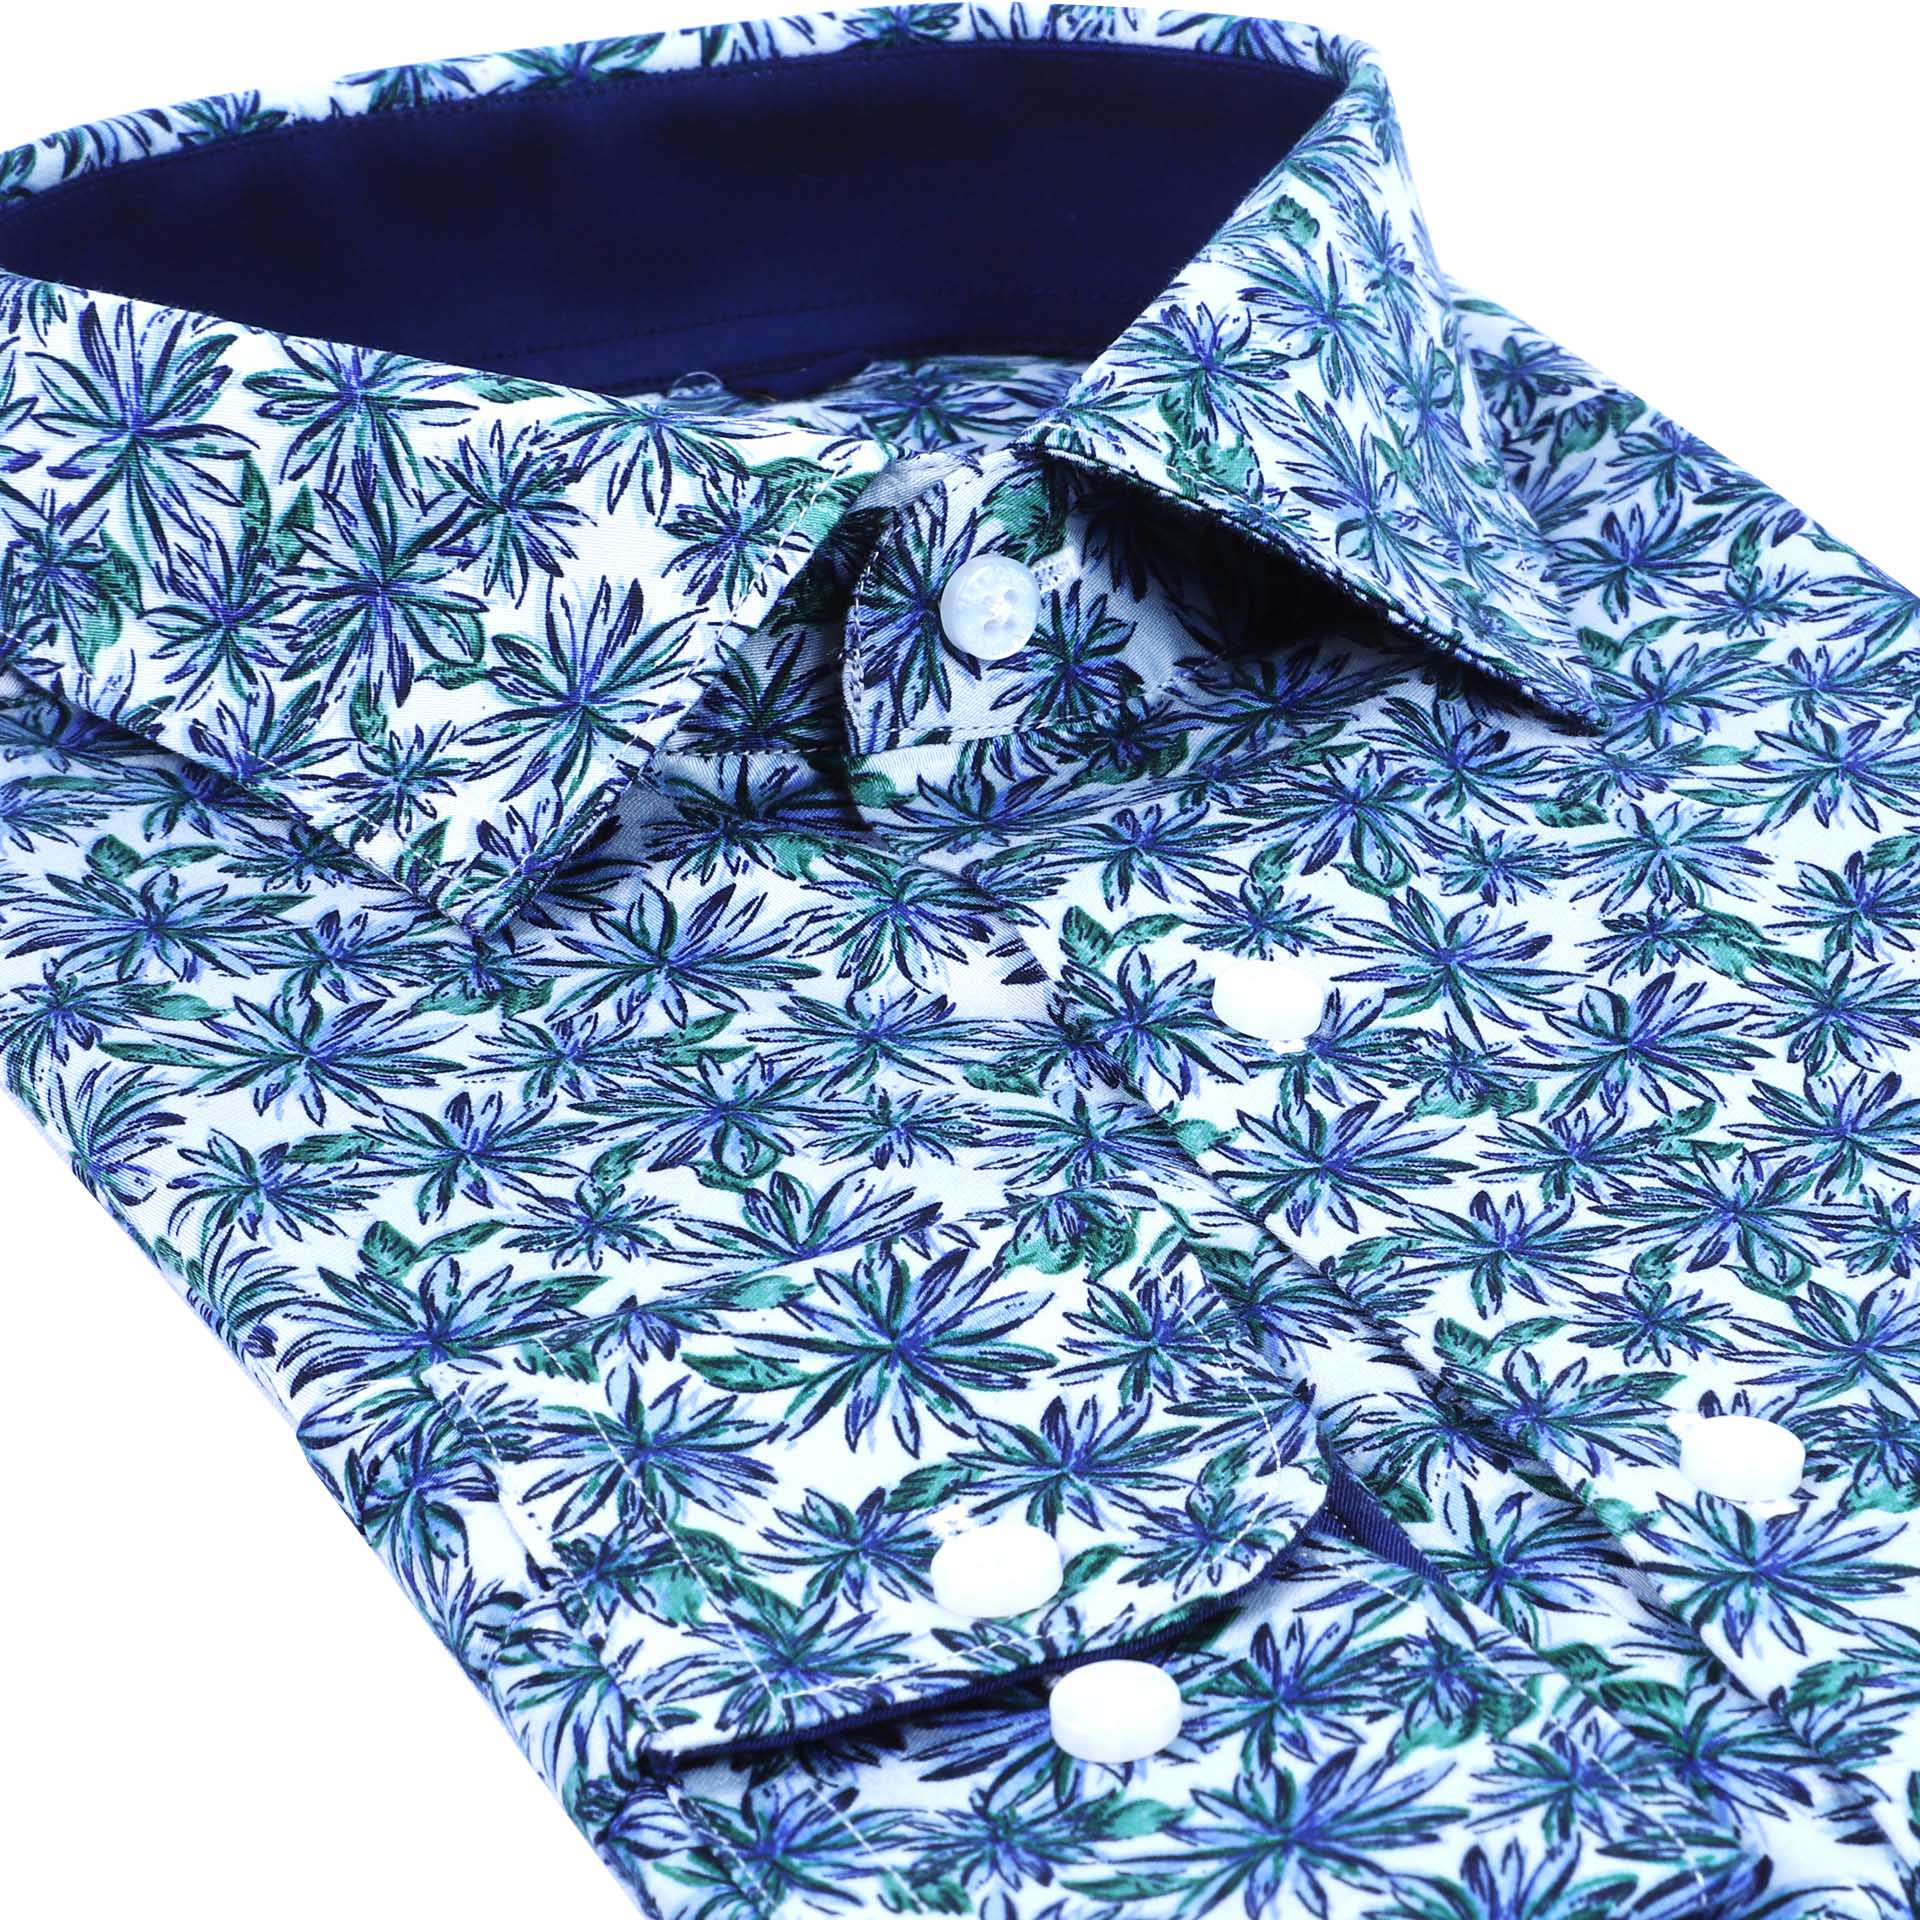 Green Floral Printed Shirt, Buy Regular Branded Cotton Shirts for Mens